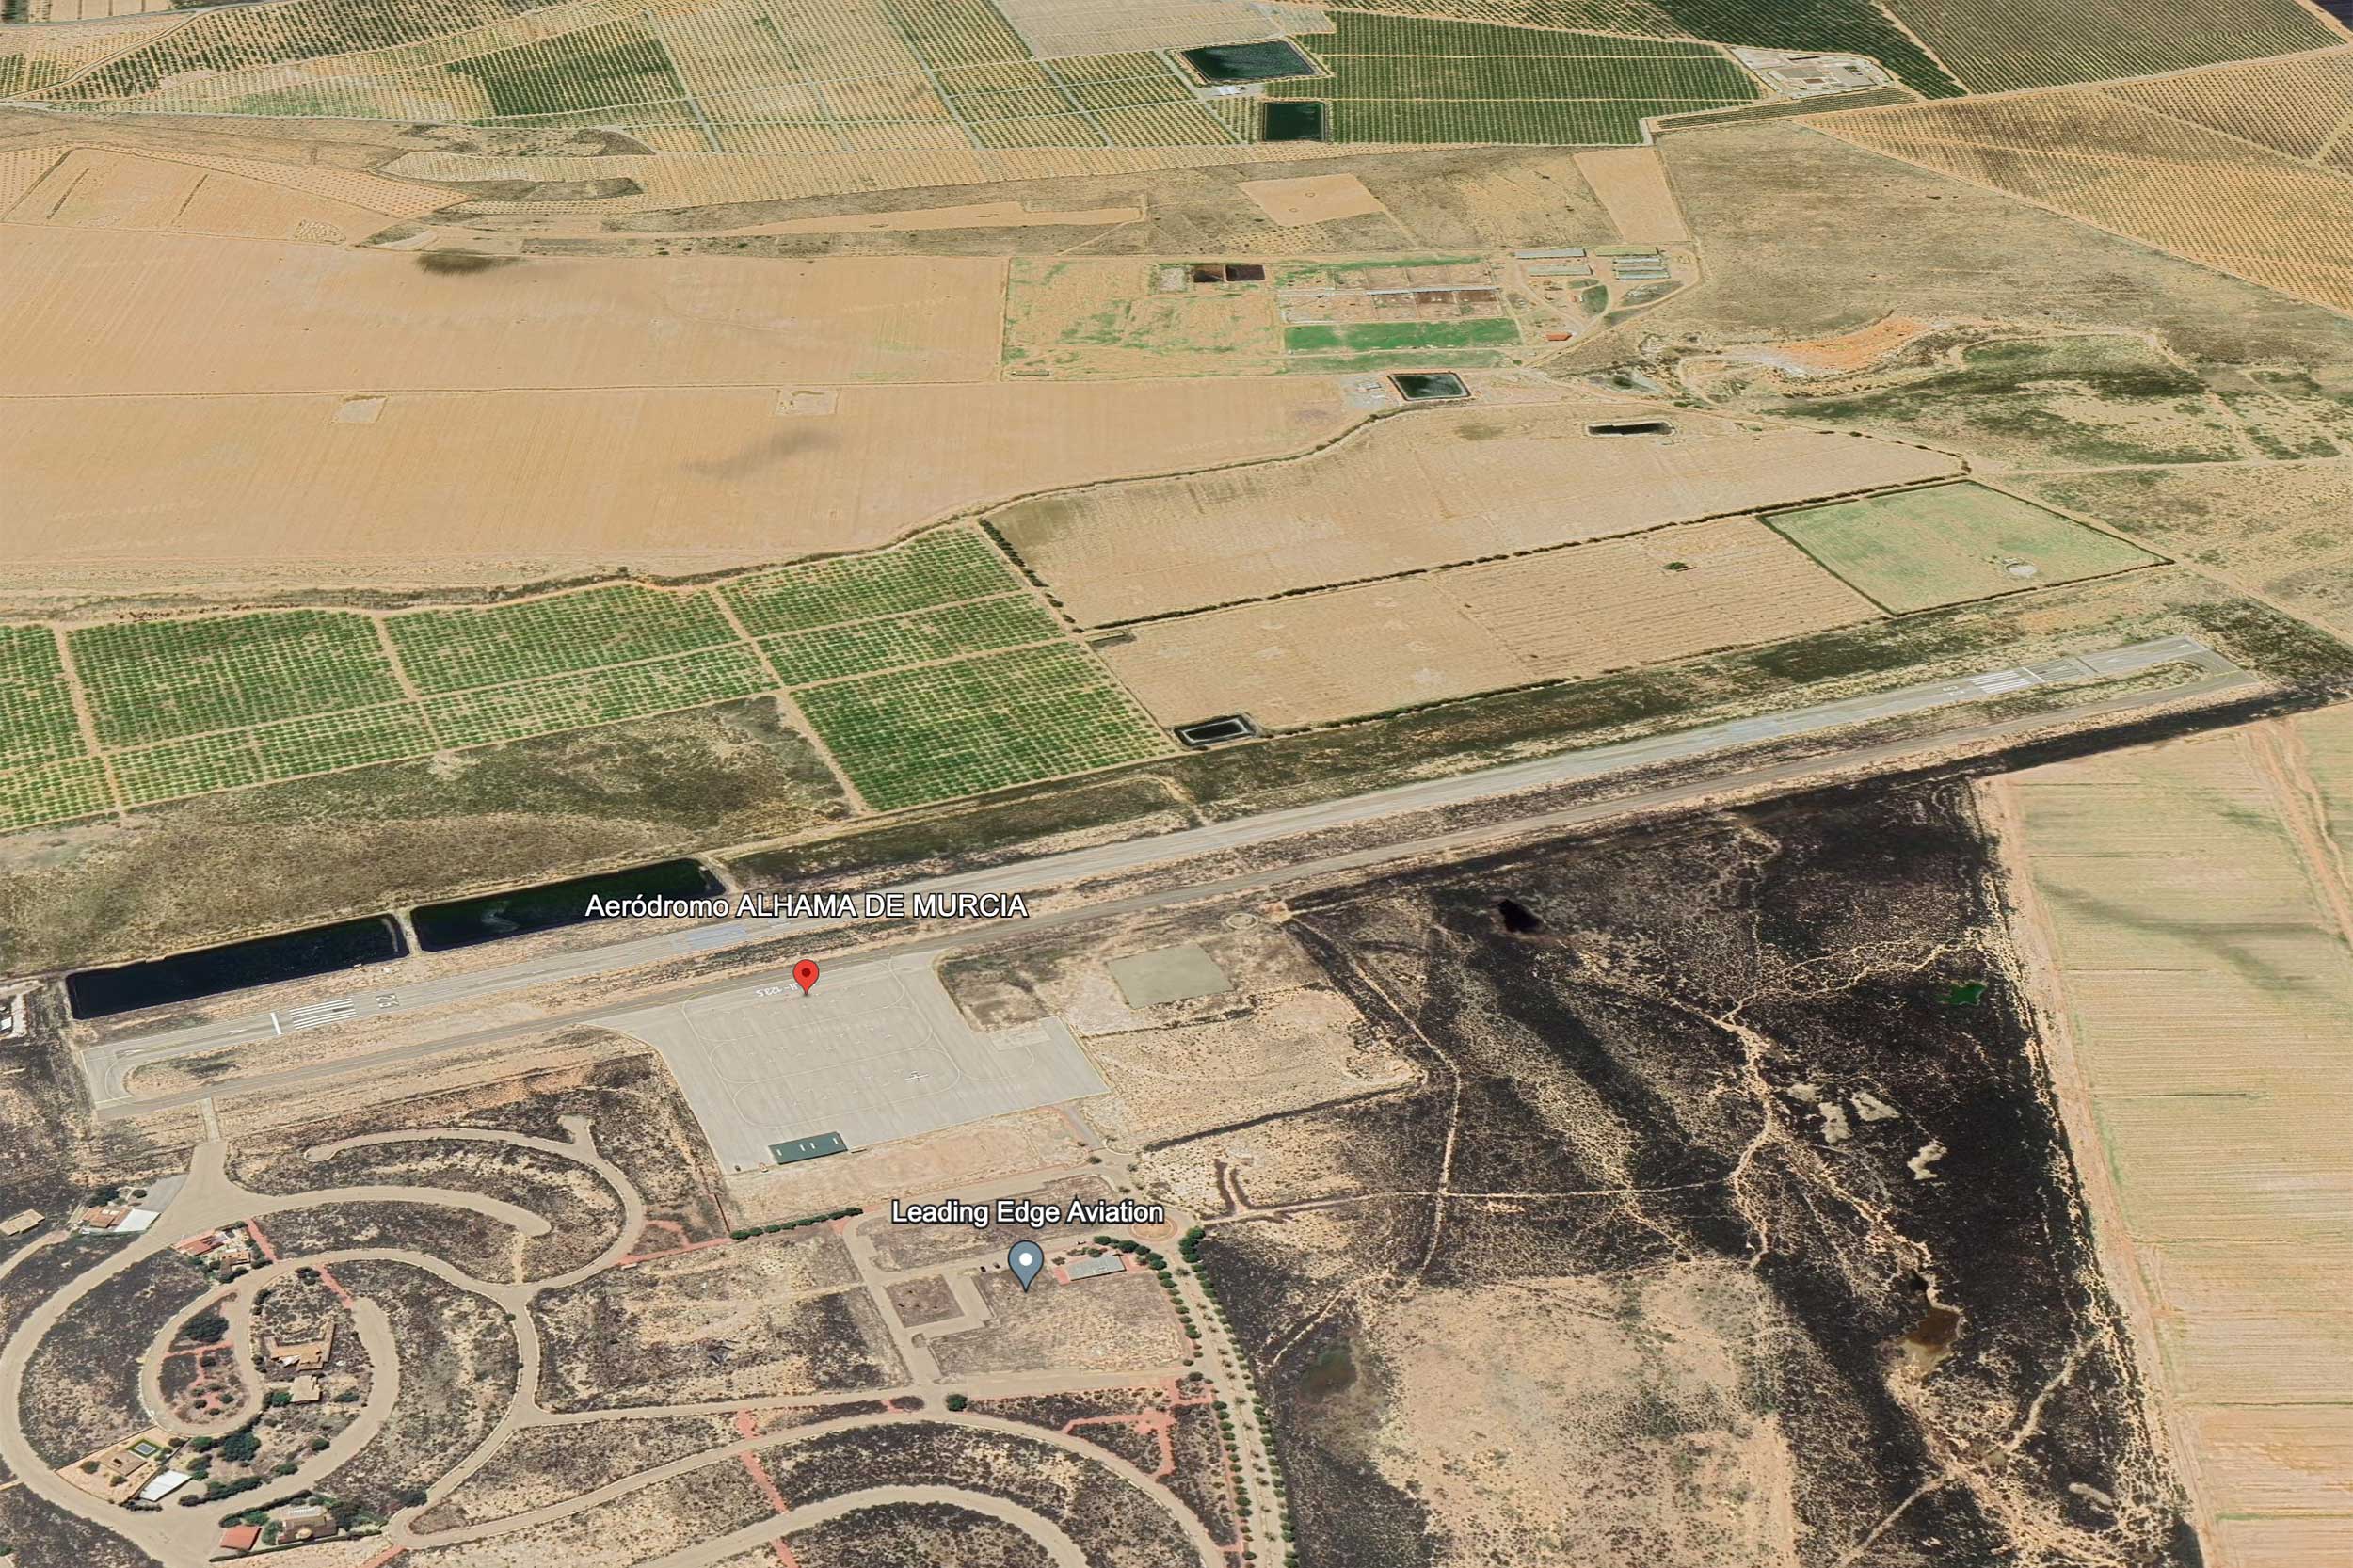 Alhama Aerodromo on Google Earth